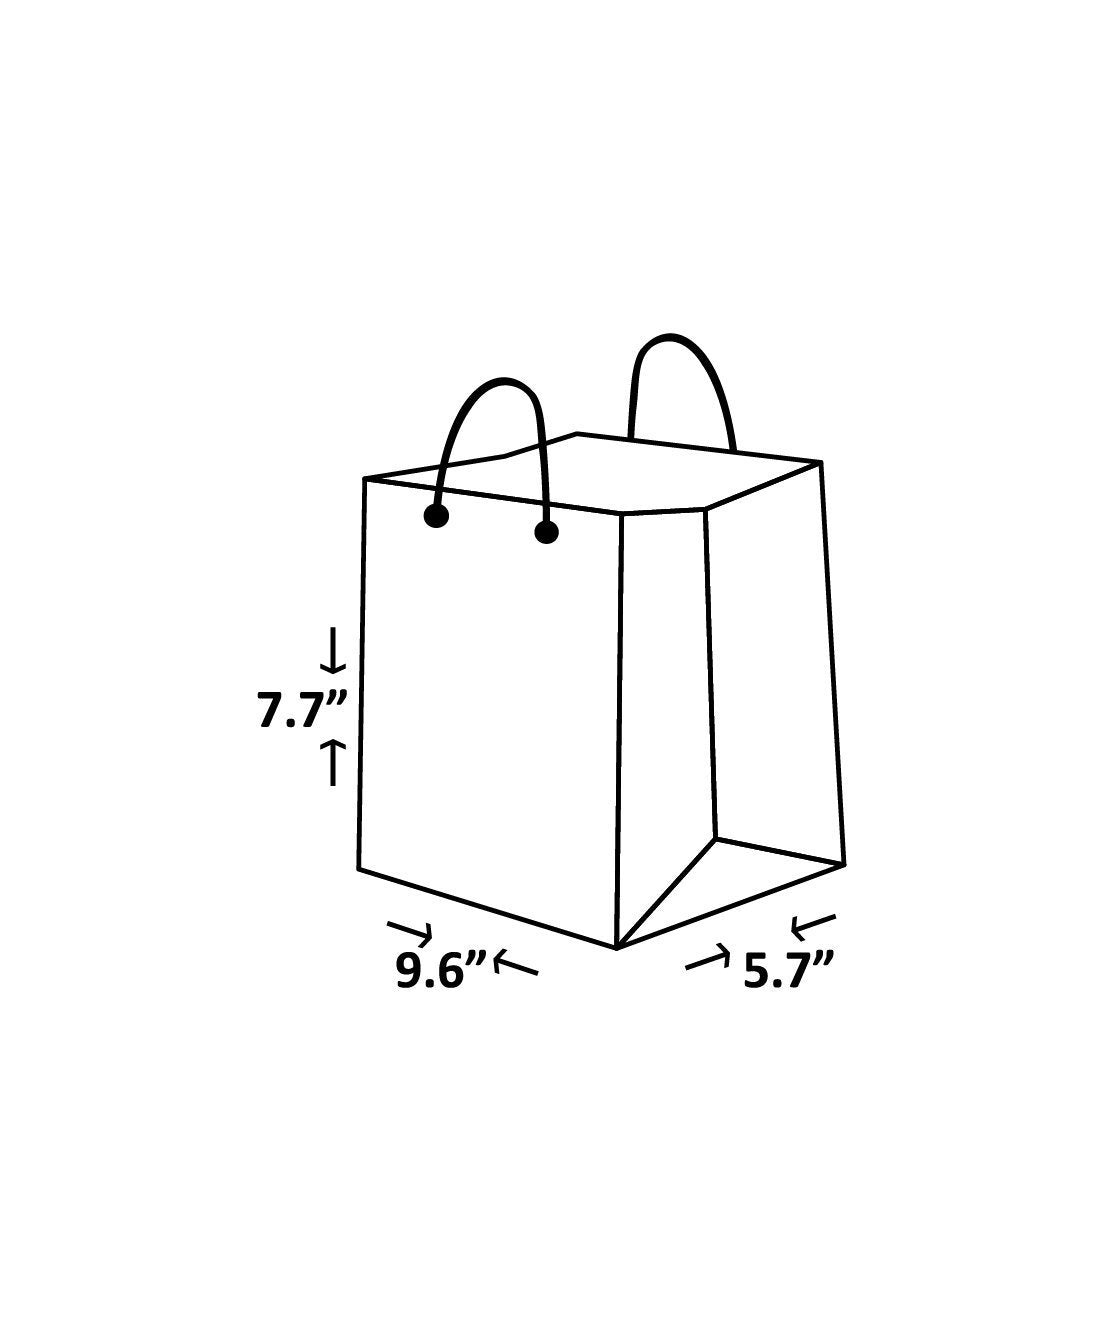 Craft Heart Pattern Paper Bag - Heart Print Design Paper Bag for Multipurpose Packing